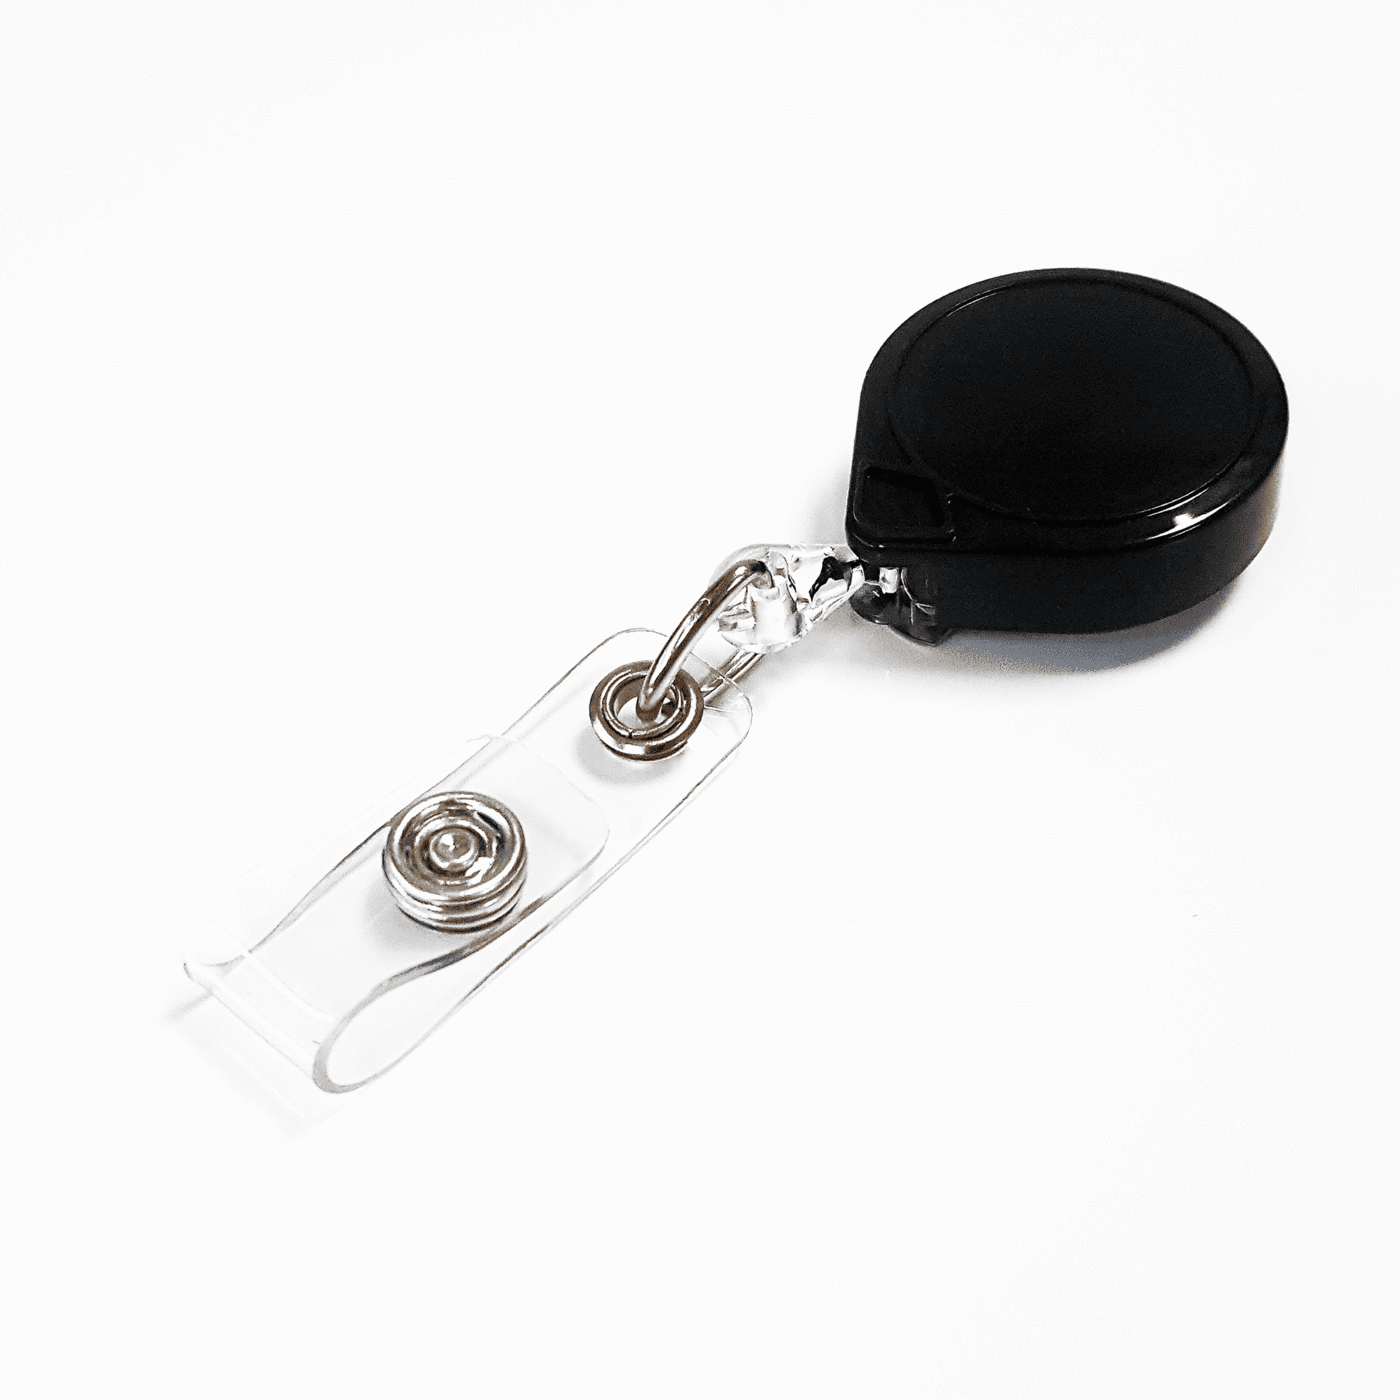 KEY-BAK MINI-BAK Retractable Badge Holder with 36 Nylon Cord, Steel Belt  Clip-Black